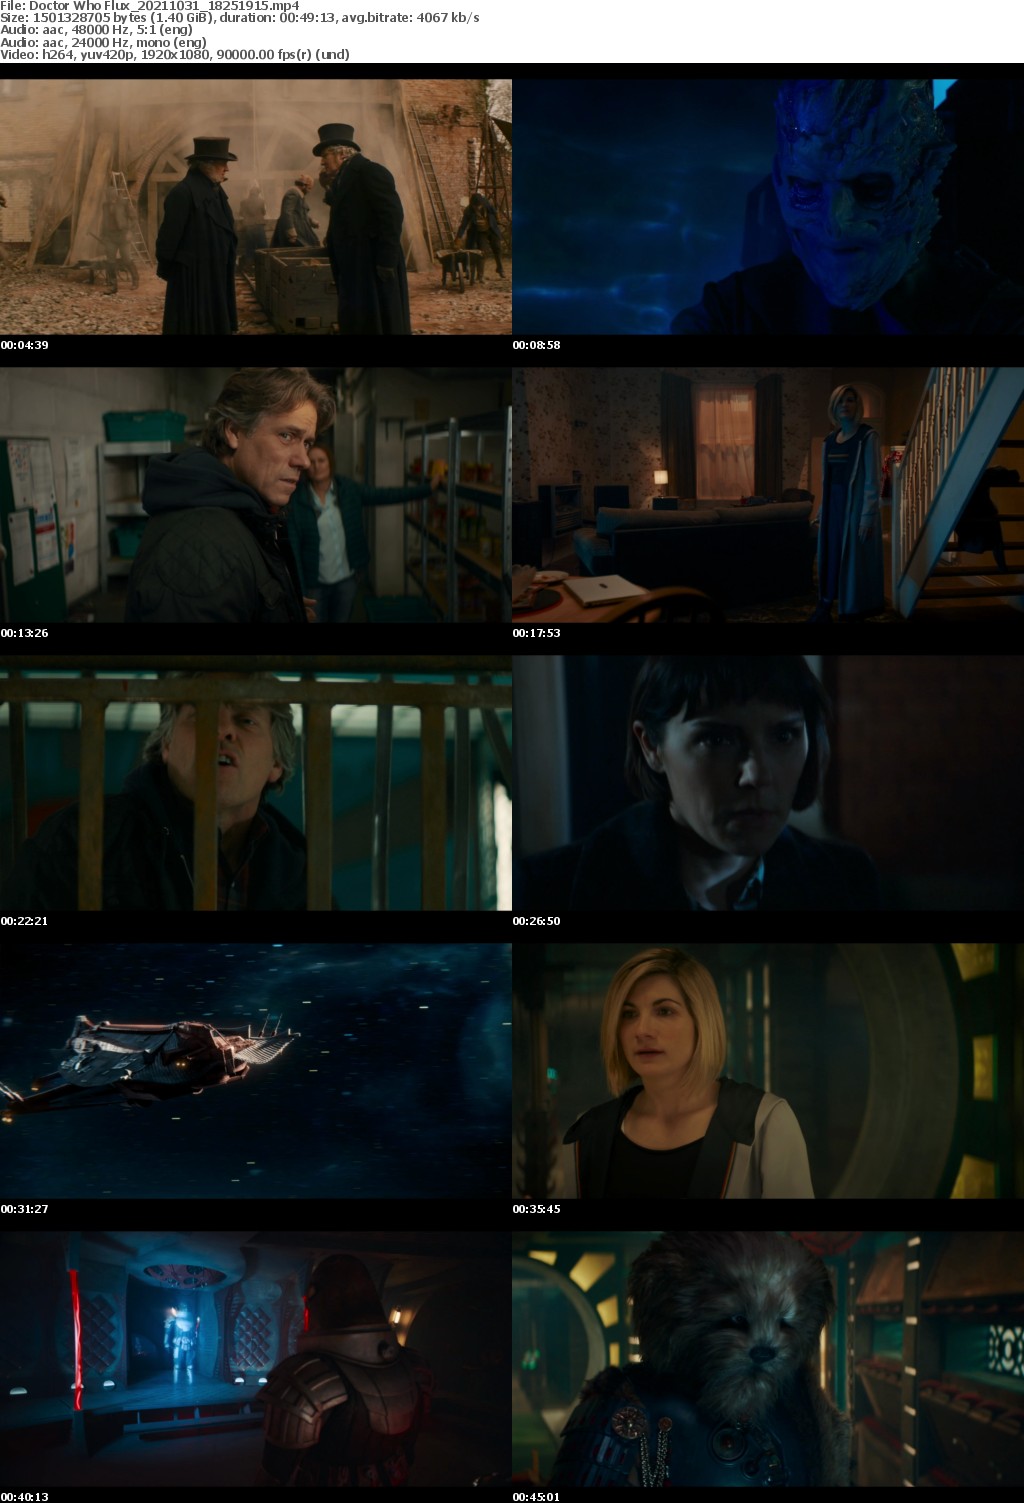 Doctor Who: Flux S13E01 The Halloween Apocalypse